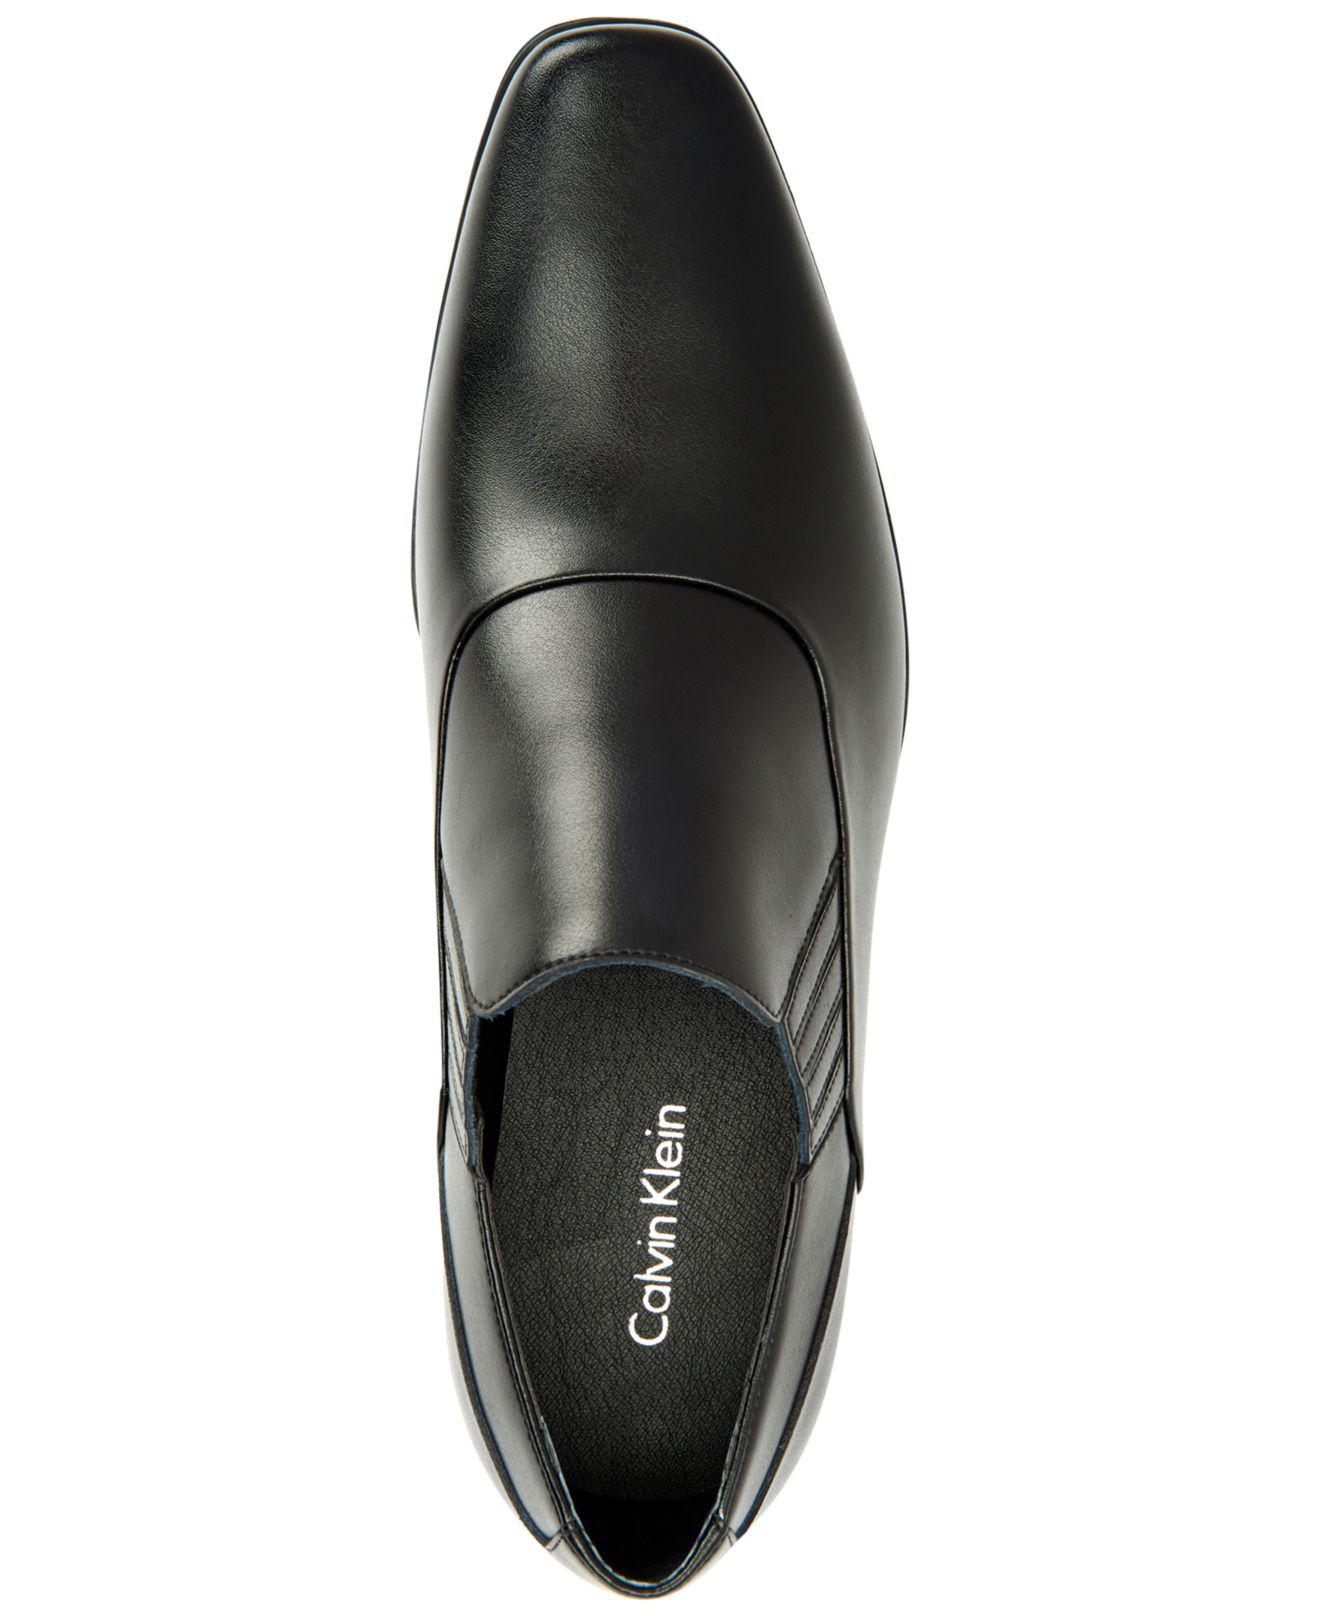 Calvin Klein Bartel Leather Dress Shoes in Black for Men - Lyst